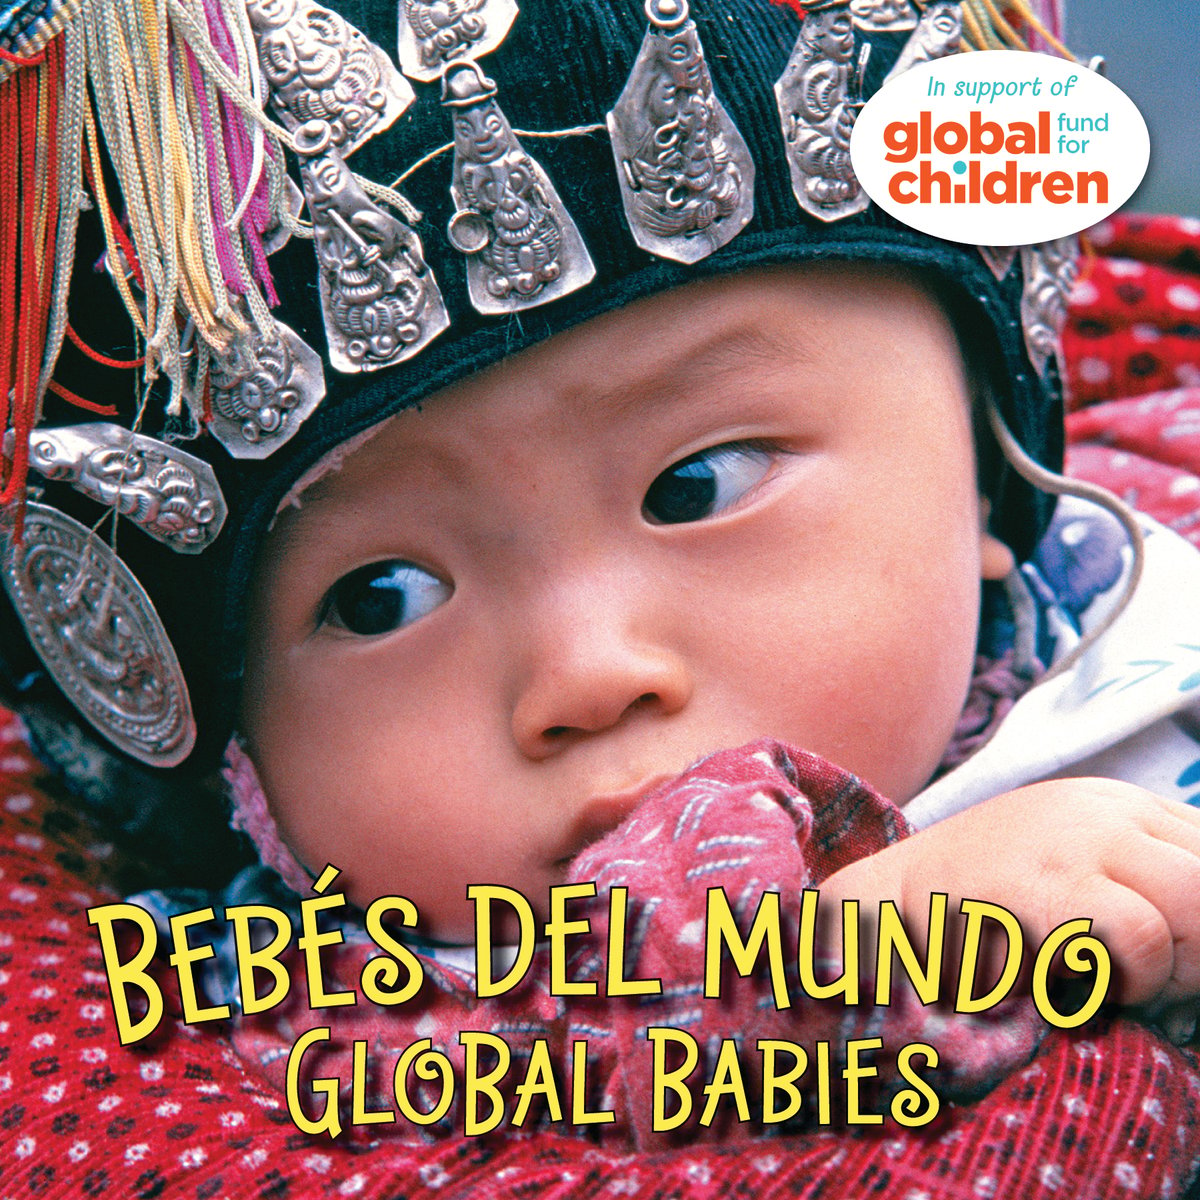 Global Babies / Bebes del mundo